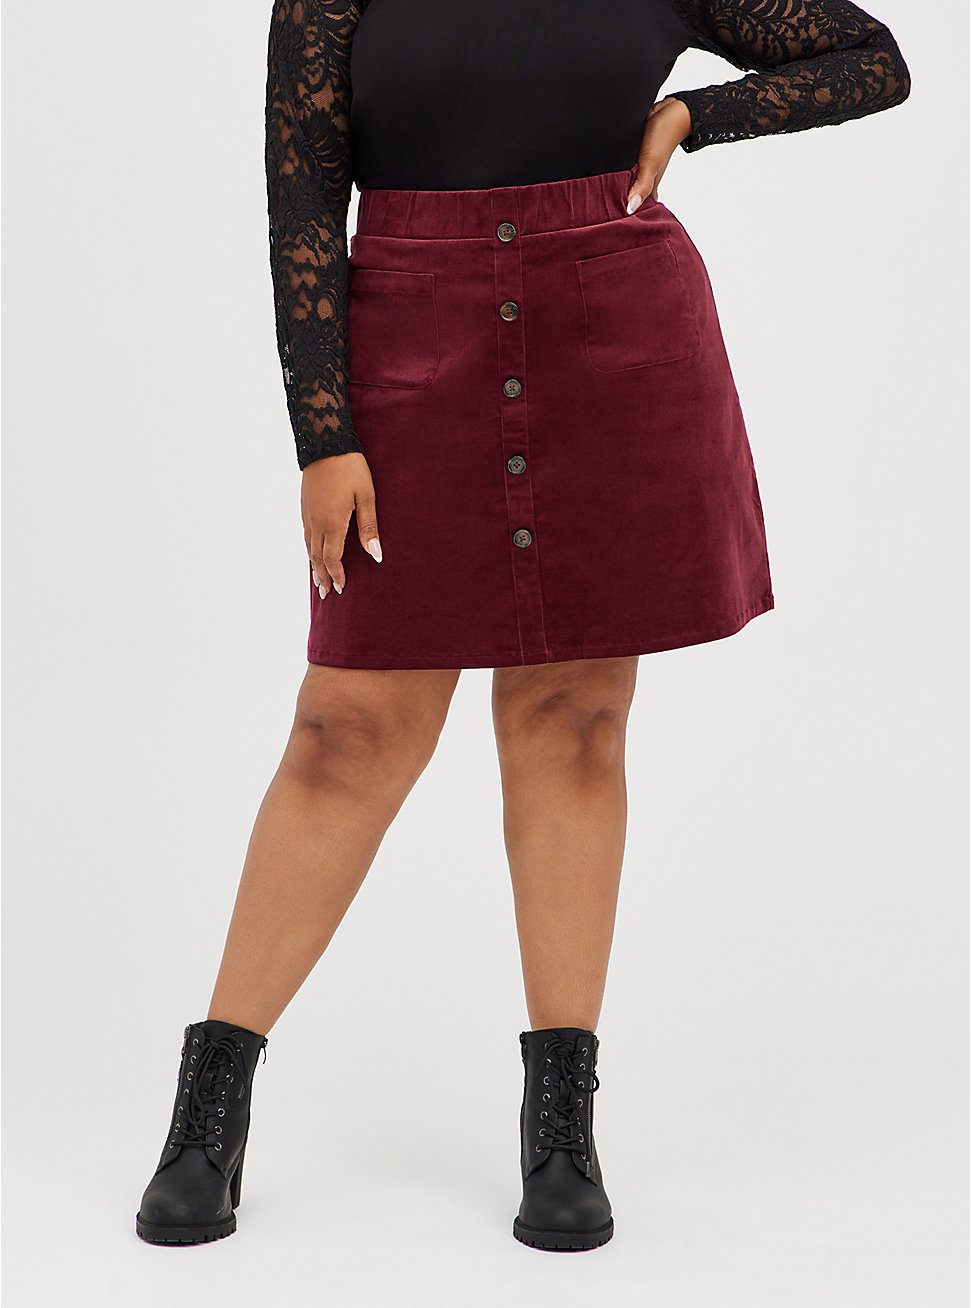 Button Front Mini Skirt - Corduroy Burgundy, ZINFANDEL, hi-res